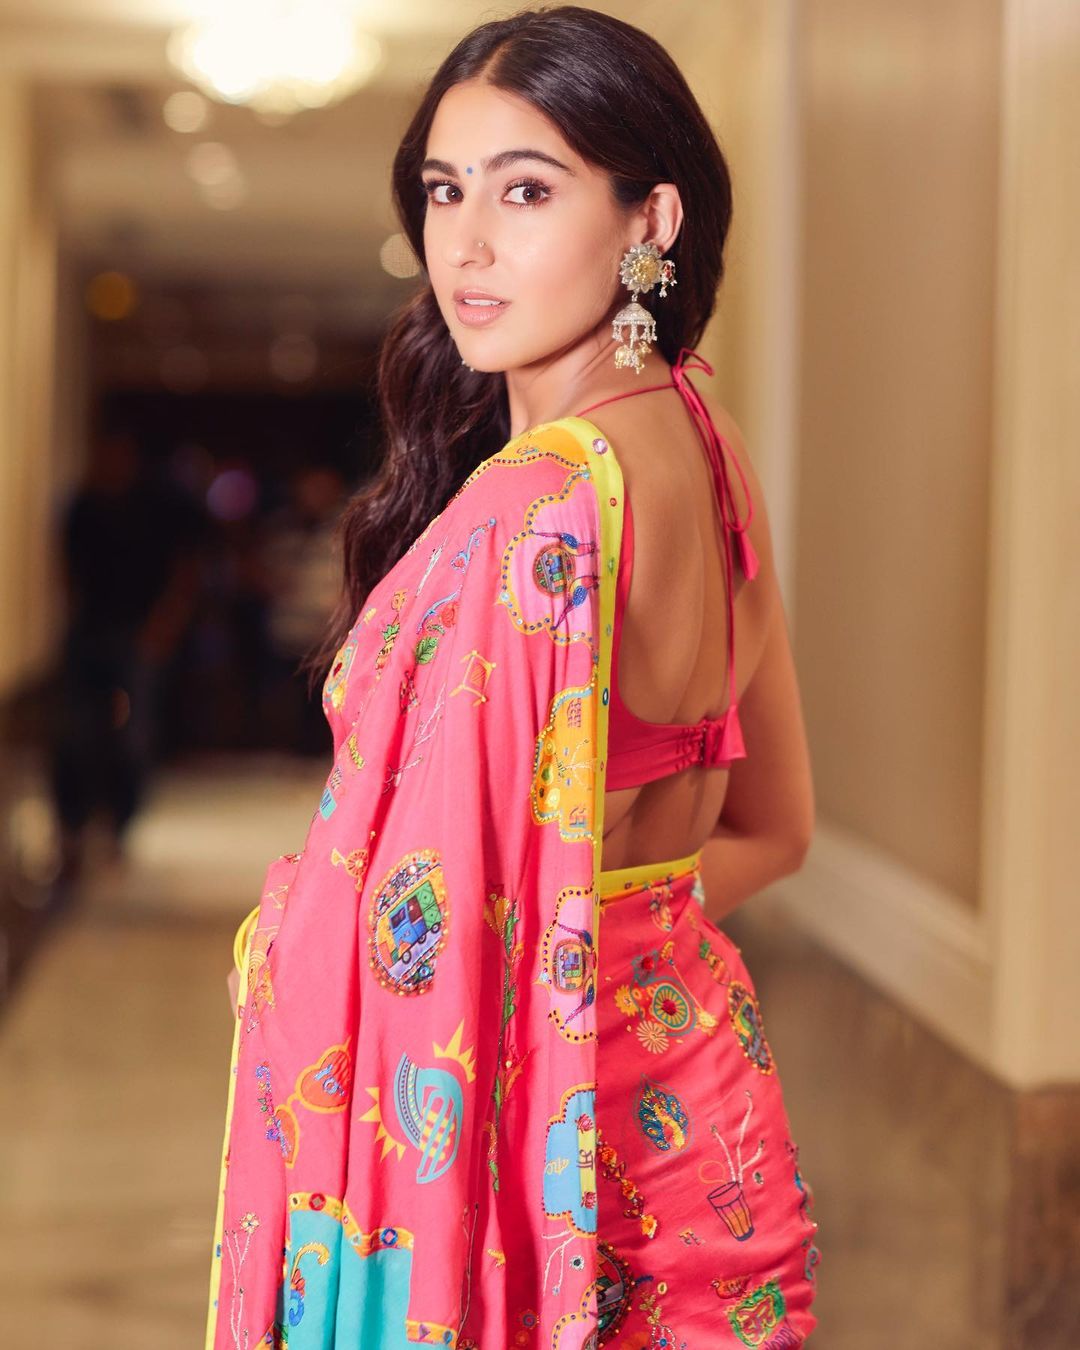 Sara Ali Khan looks graceful in the pink saree